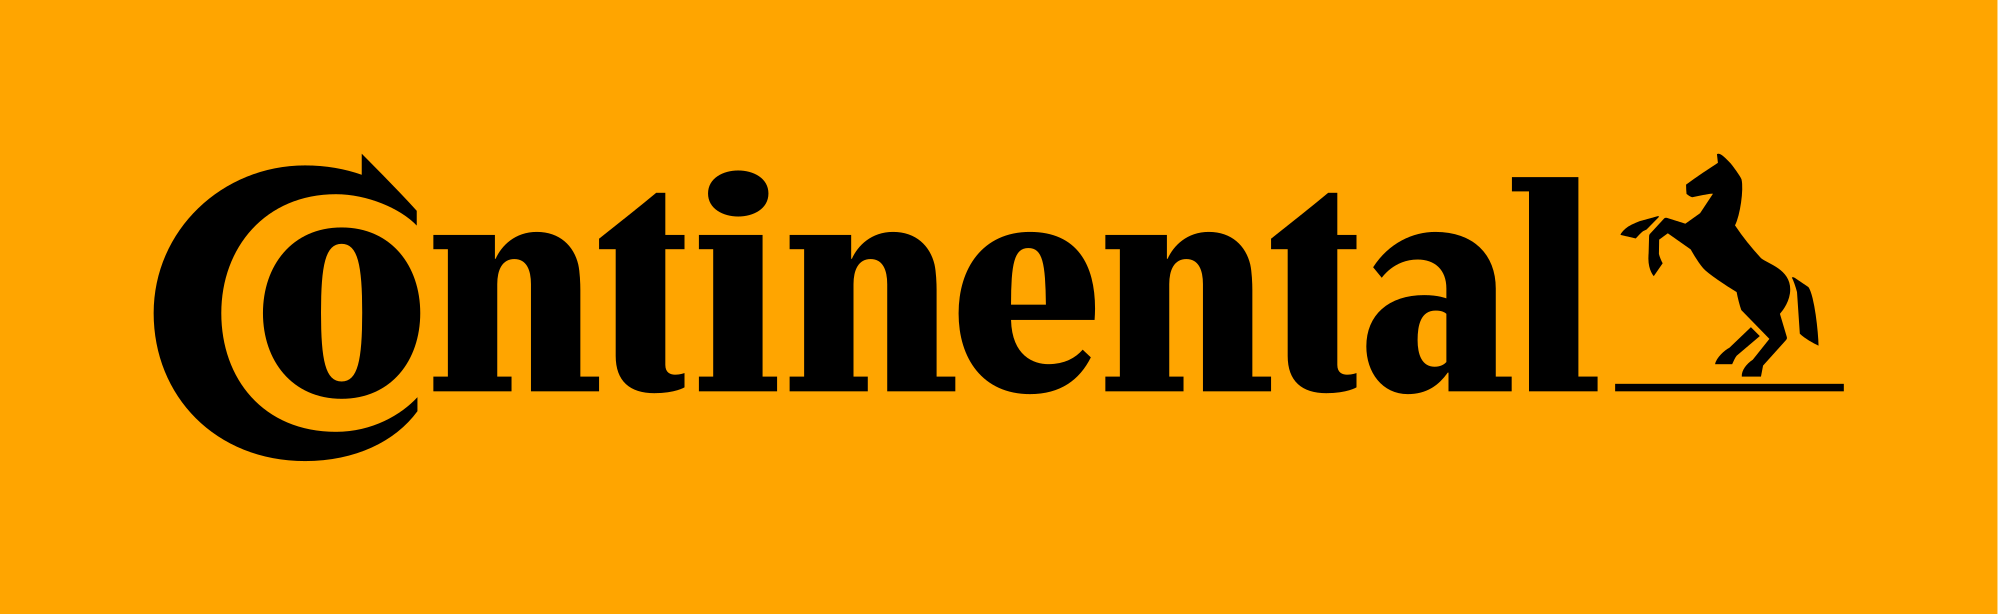 continental logo.png